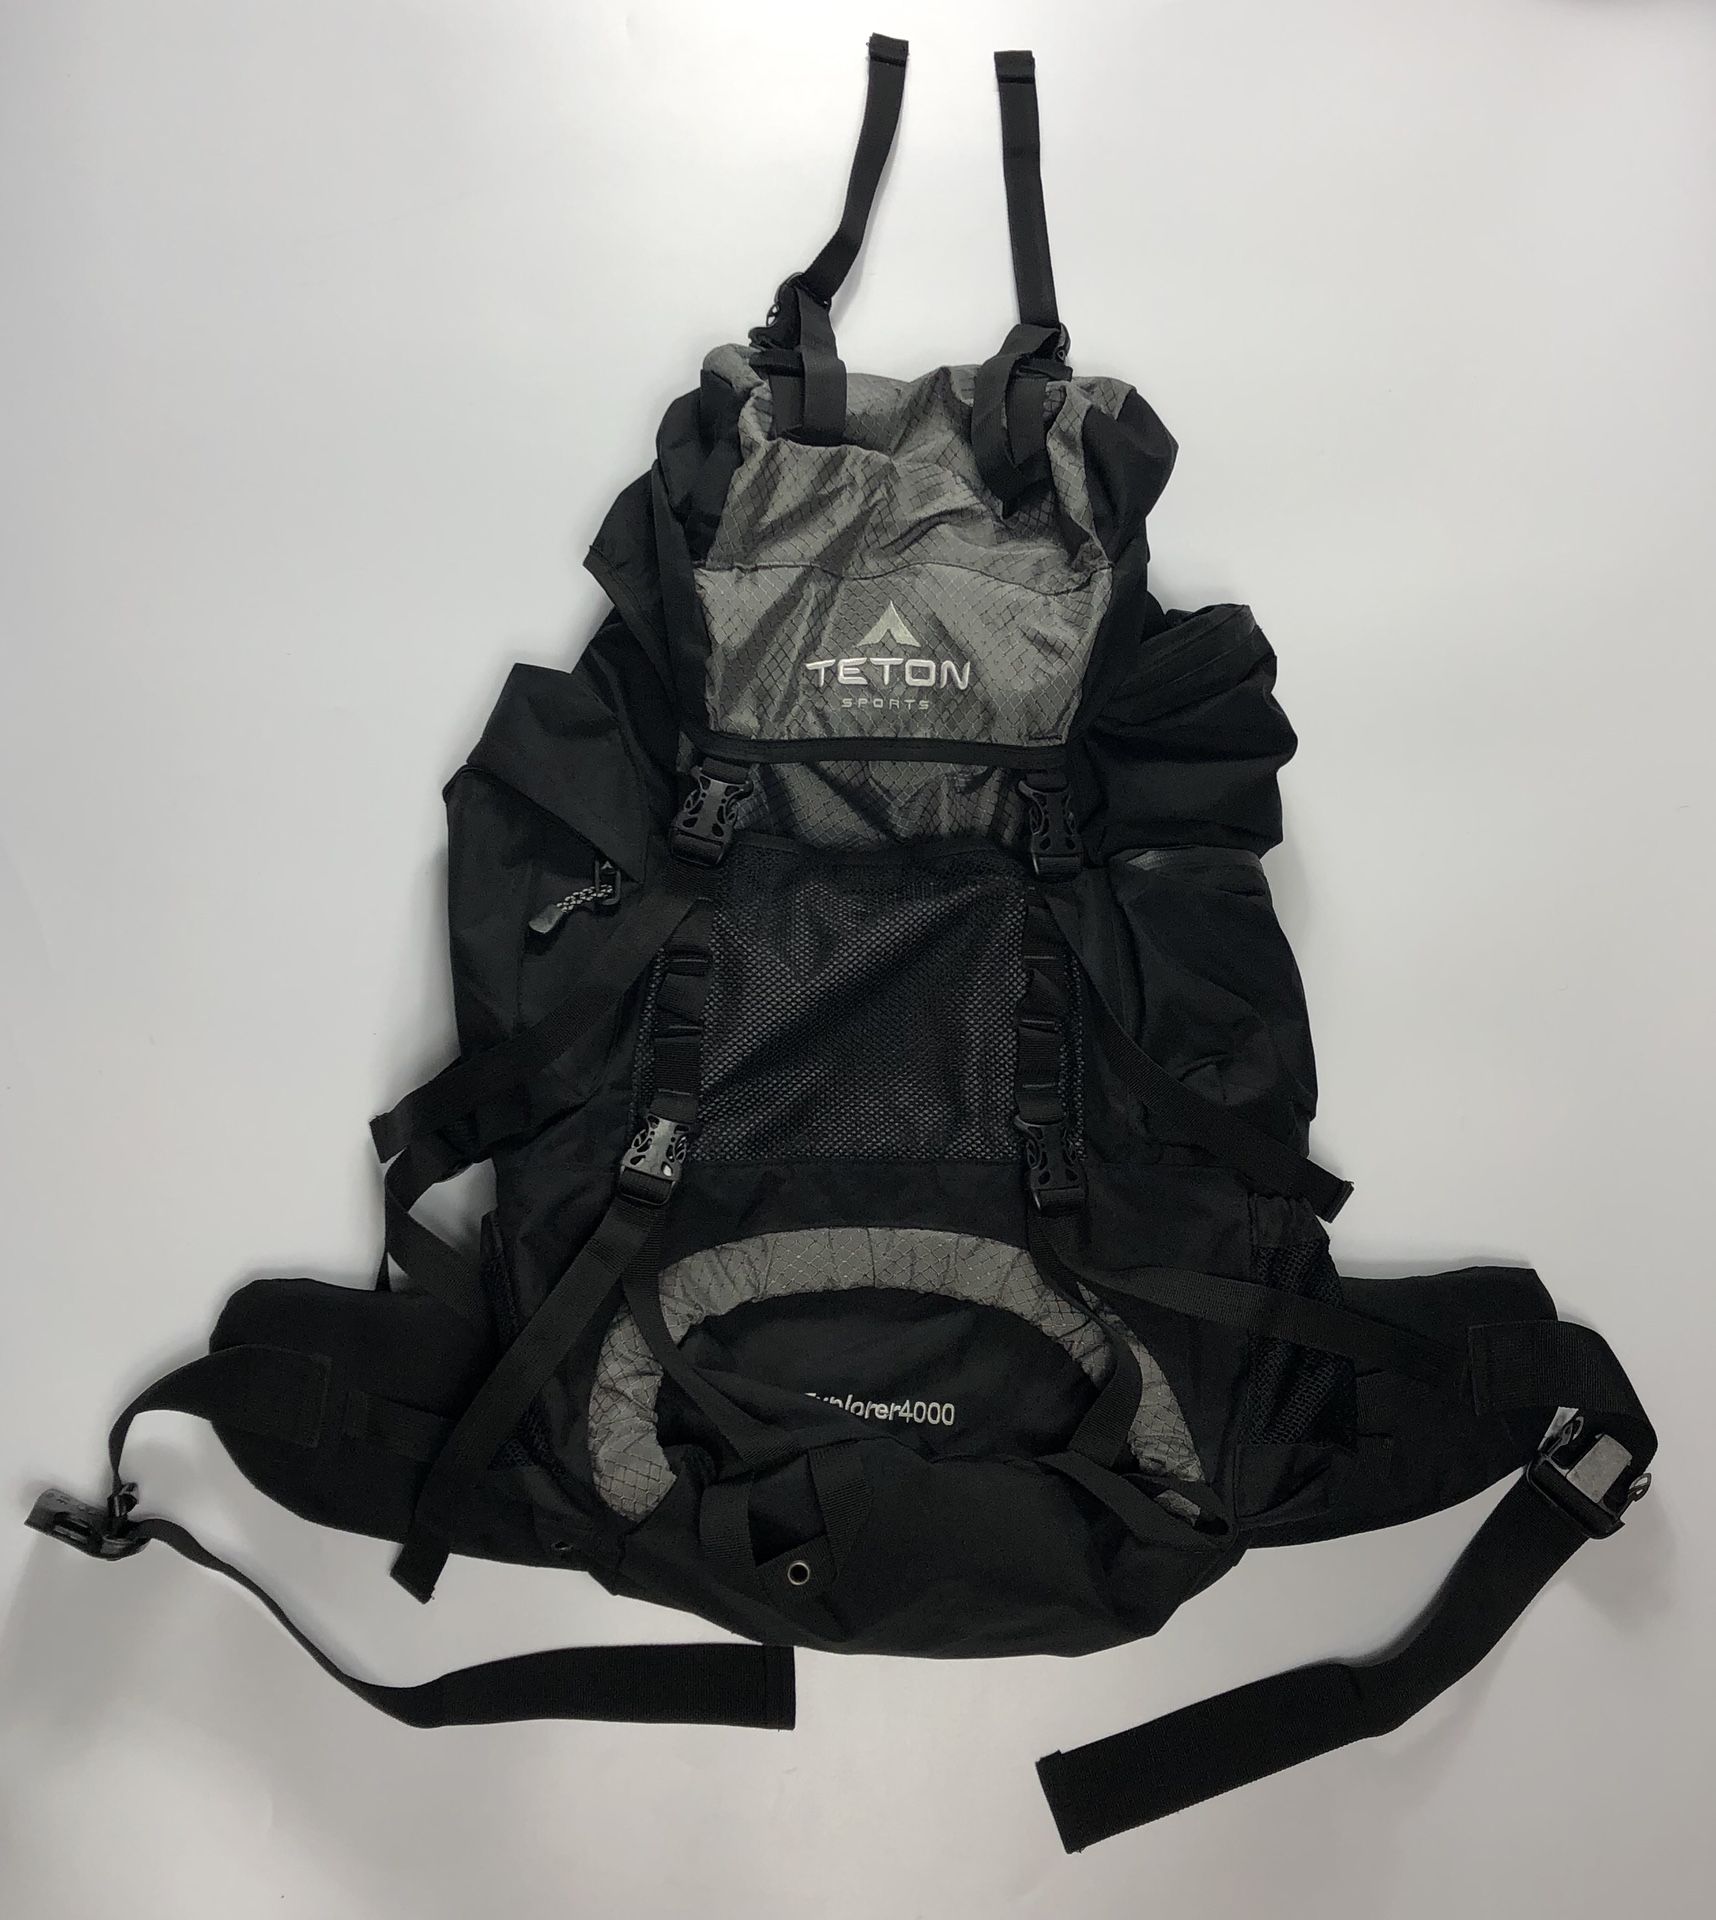 TETON Sports Explorer 4000 Frames Hiking Backpack High-Performance Medium Black